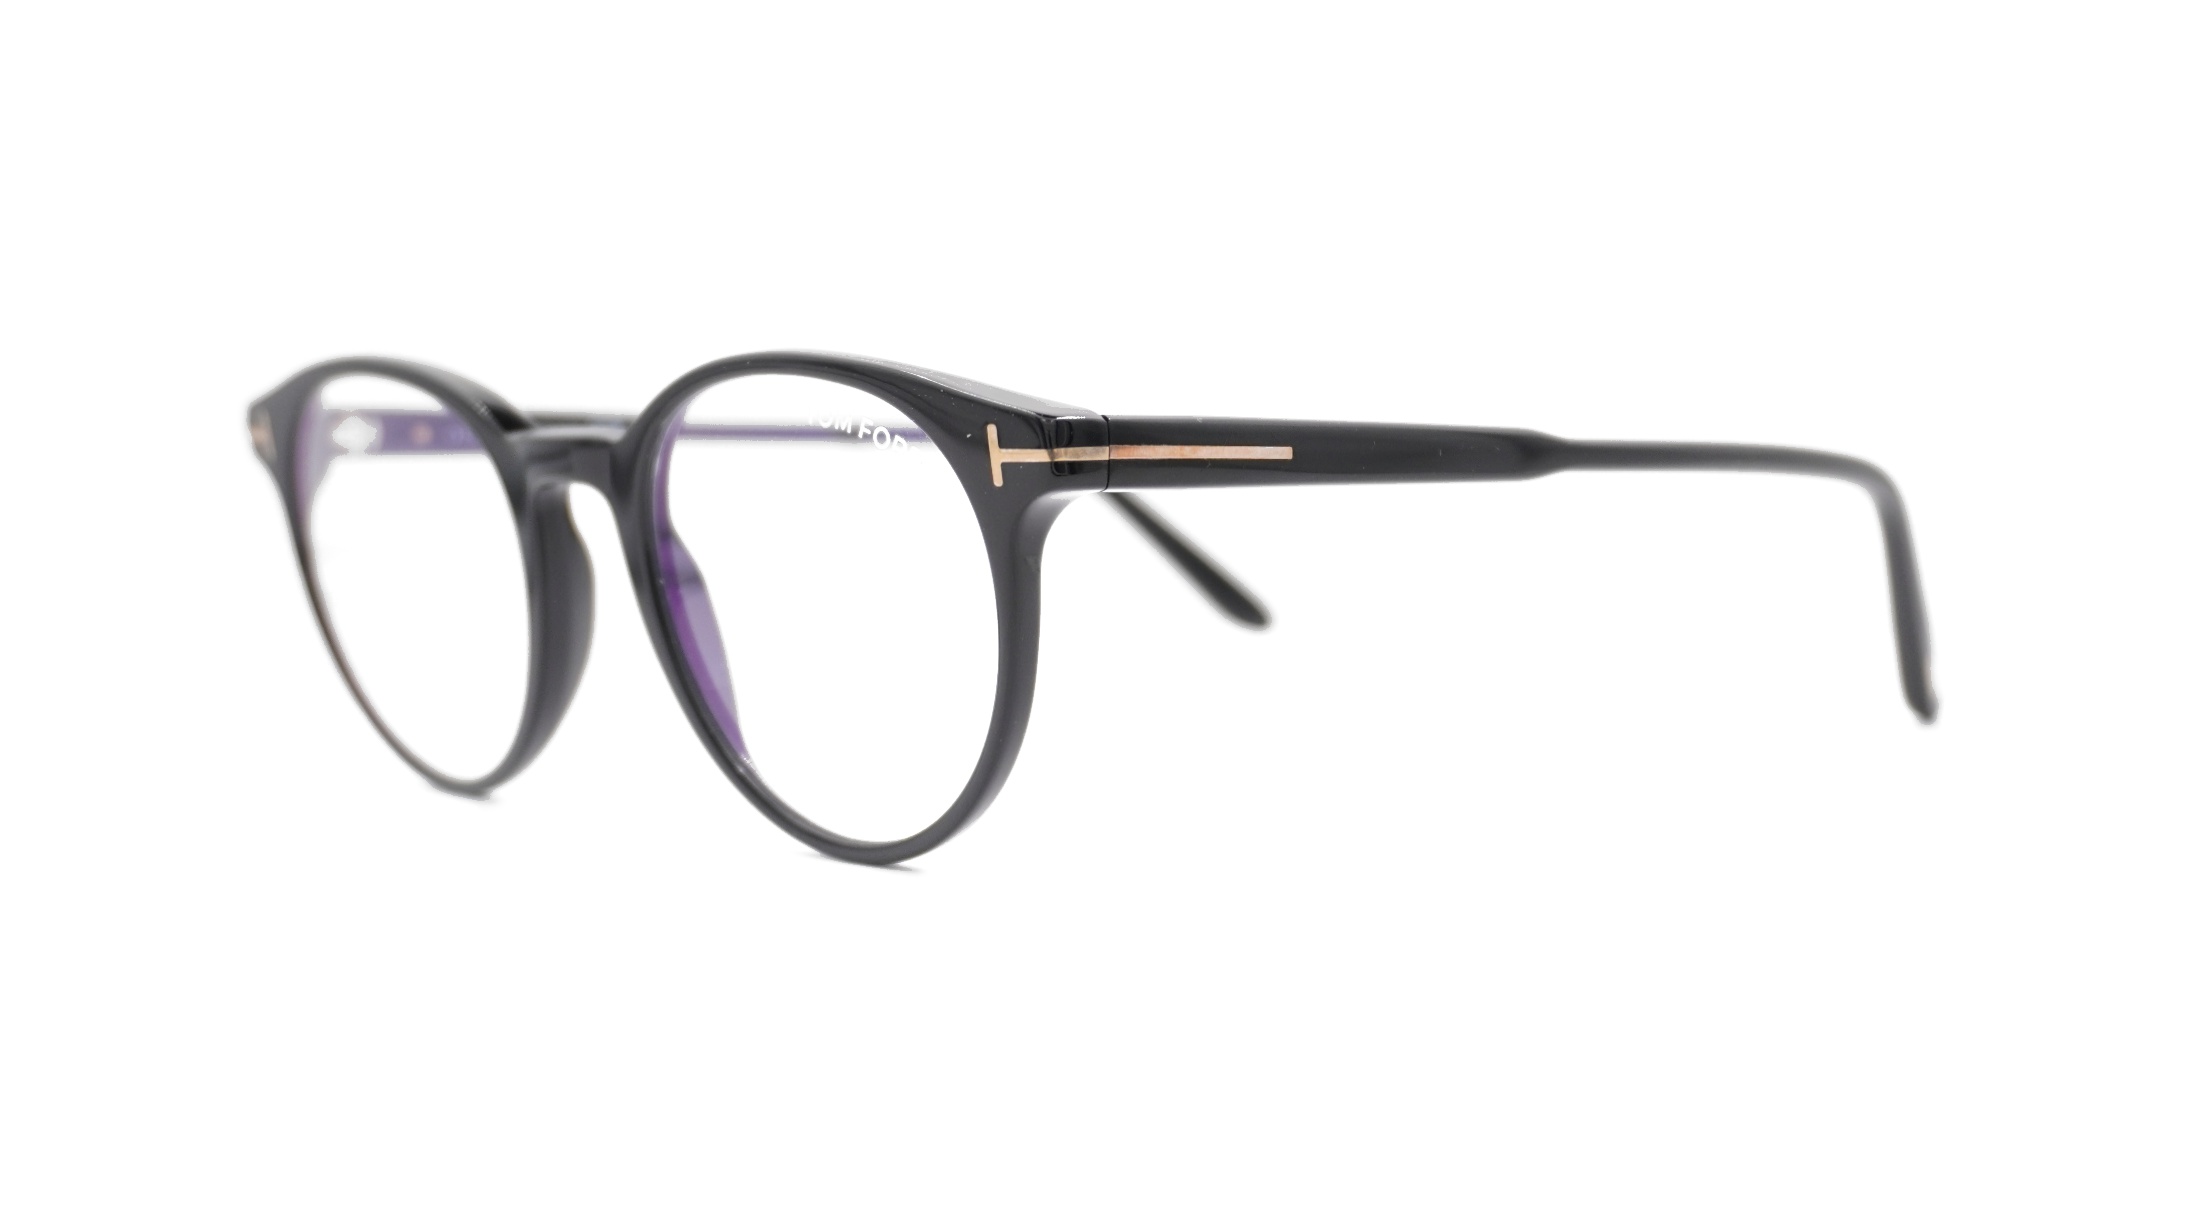 Glasses Tom-ford Tf5695-b, black colour - Doyle